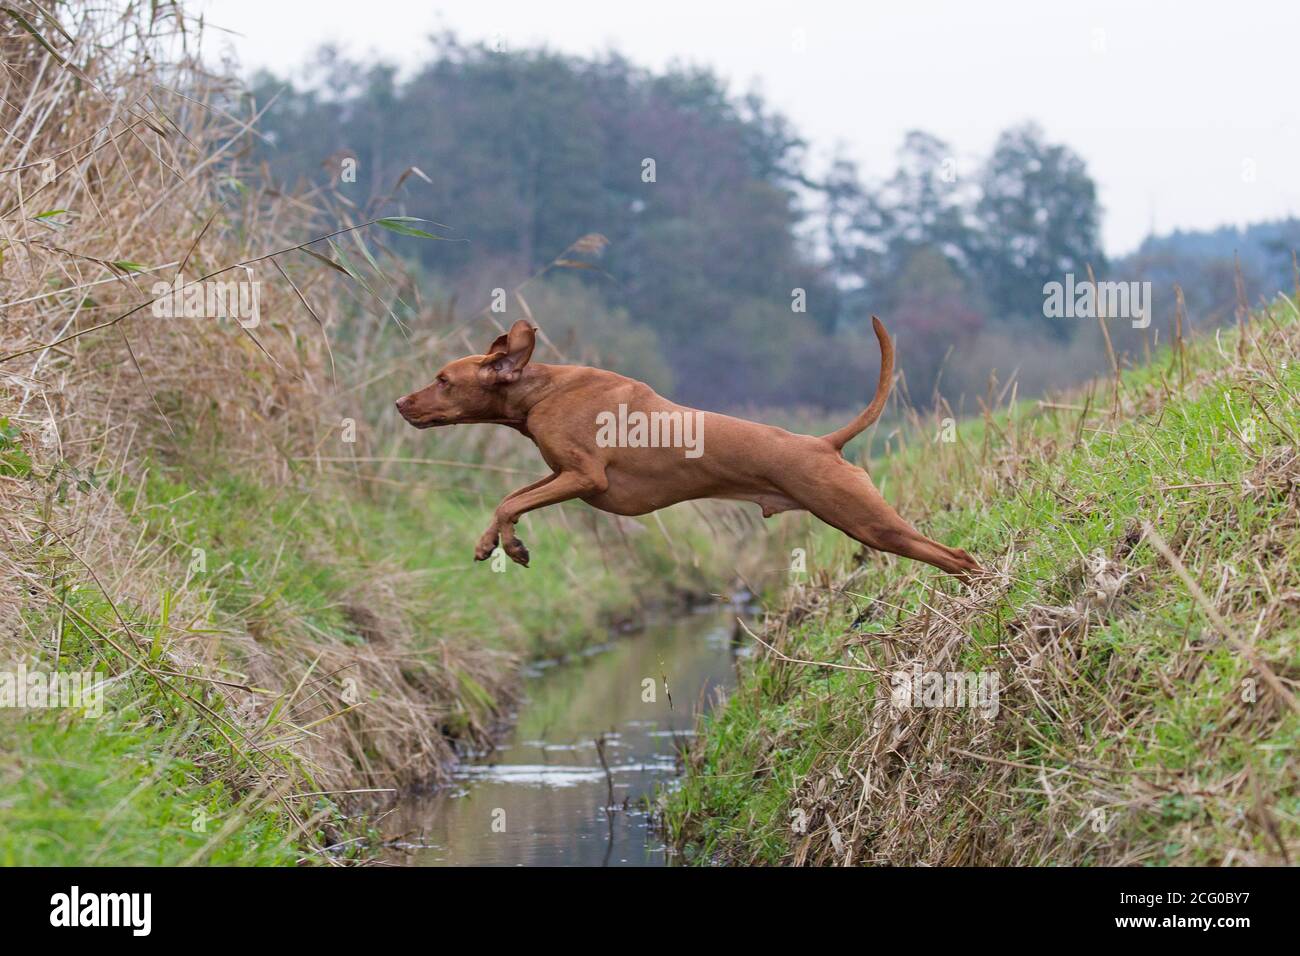 Hungarian Vizsla / Magyar Vizsla, sporting dog breed from Hungary jumping over ditch Stock Photo